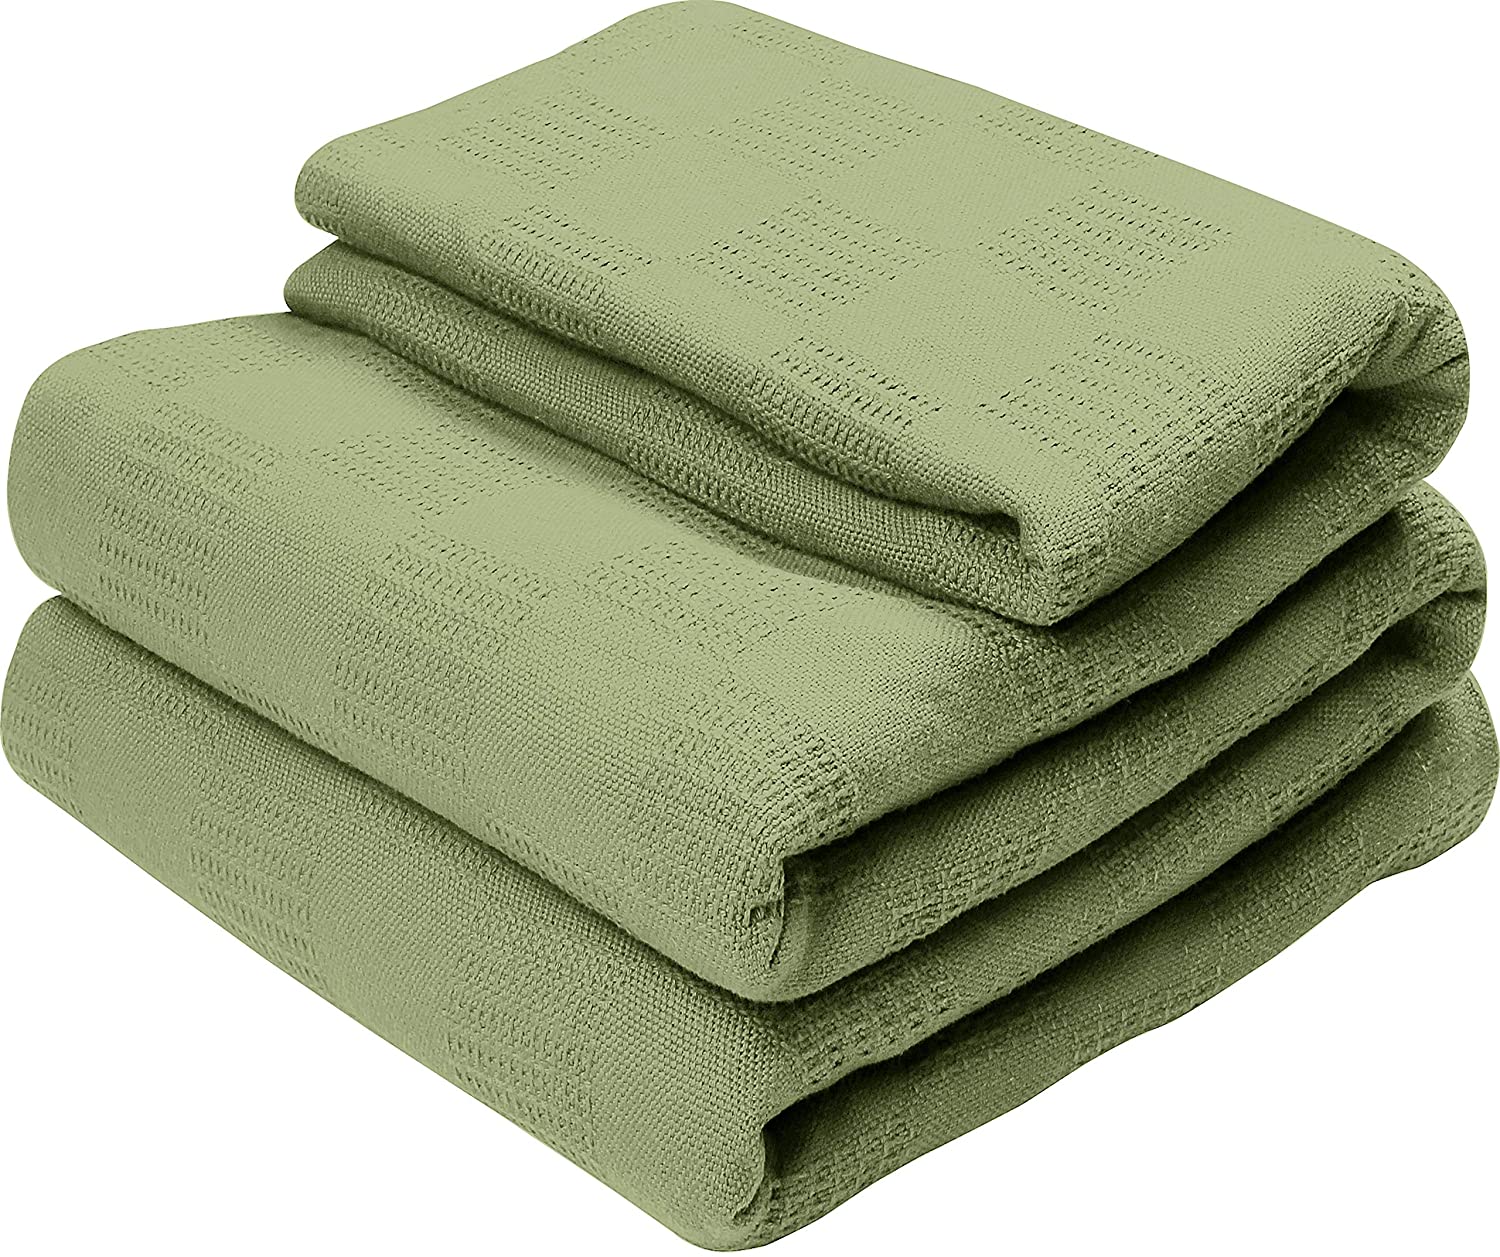 Utopia Bedding Premium Summer Cotton Blanket Queen Sage Green - Soft  Breathable